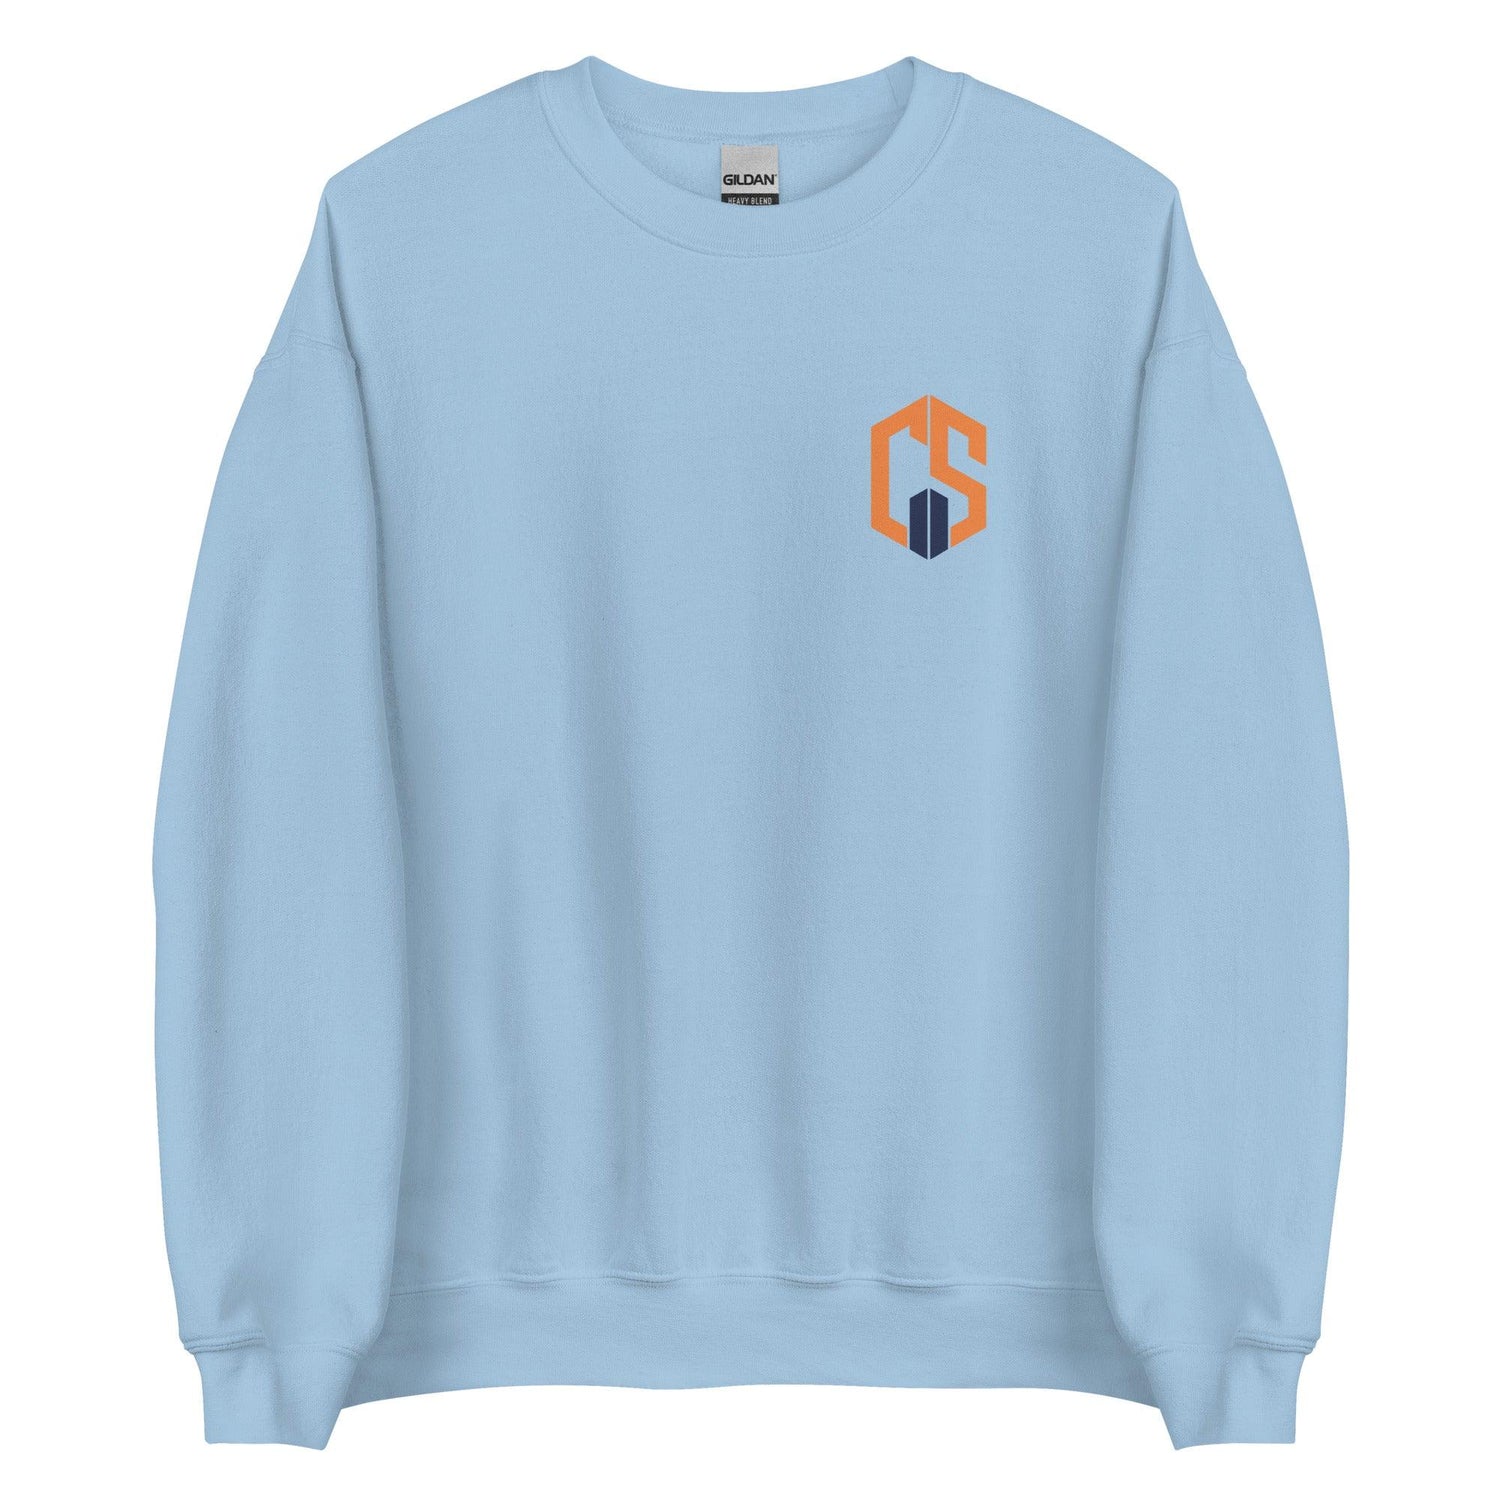 Casey Saucke II “Signature” Sweatshirt - Fan Arch